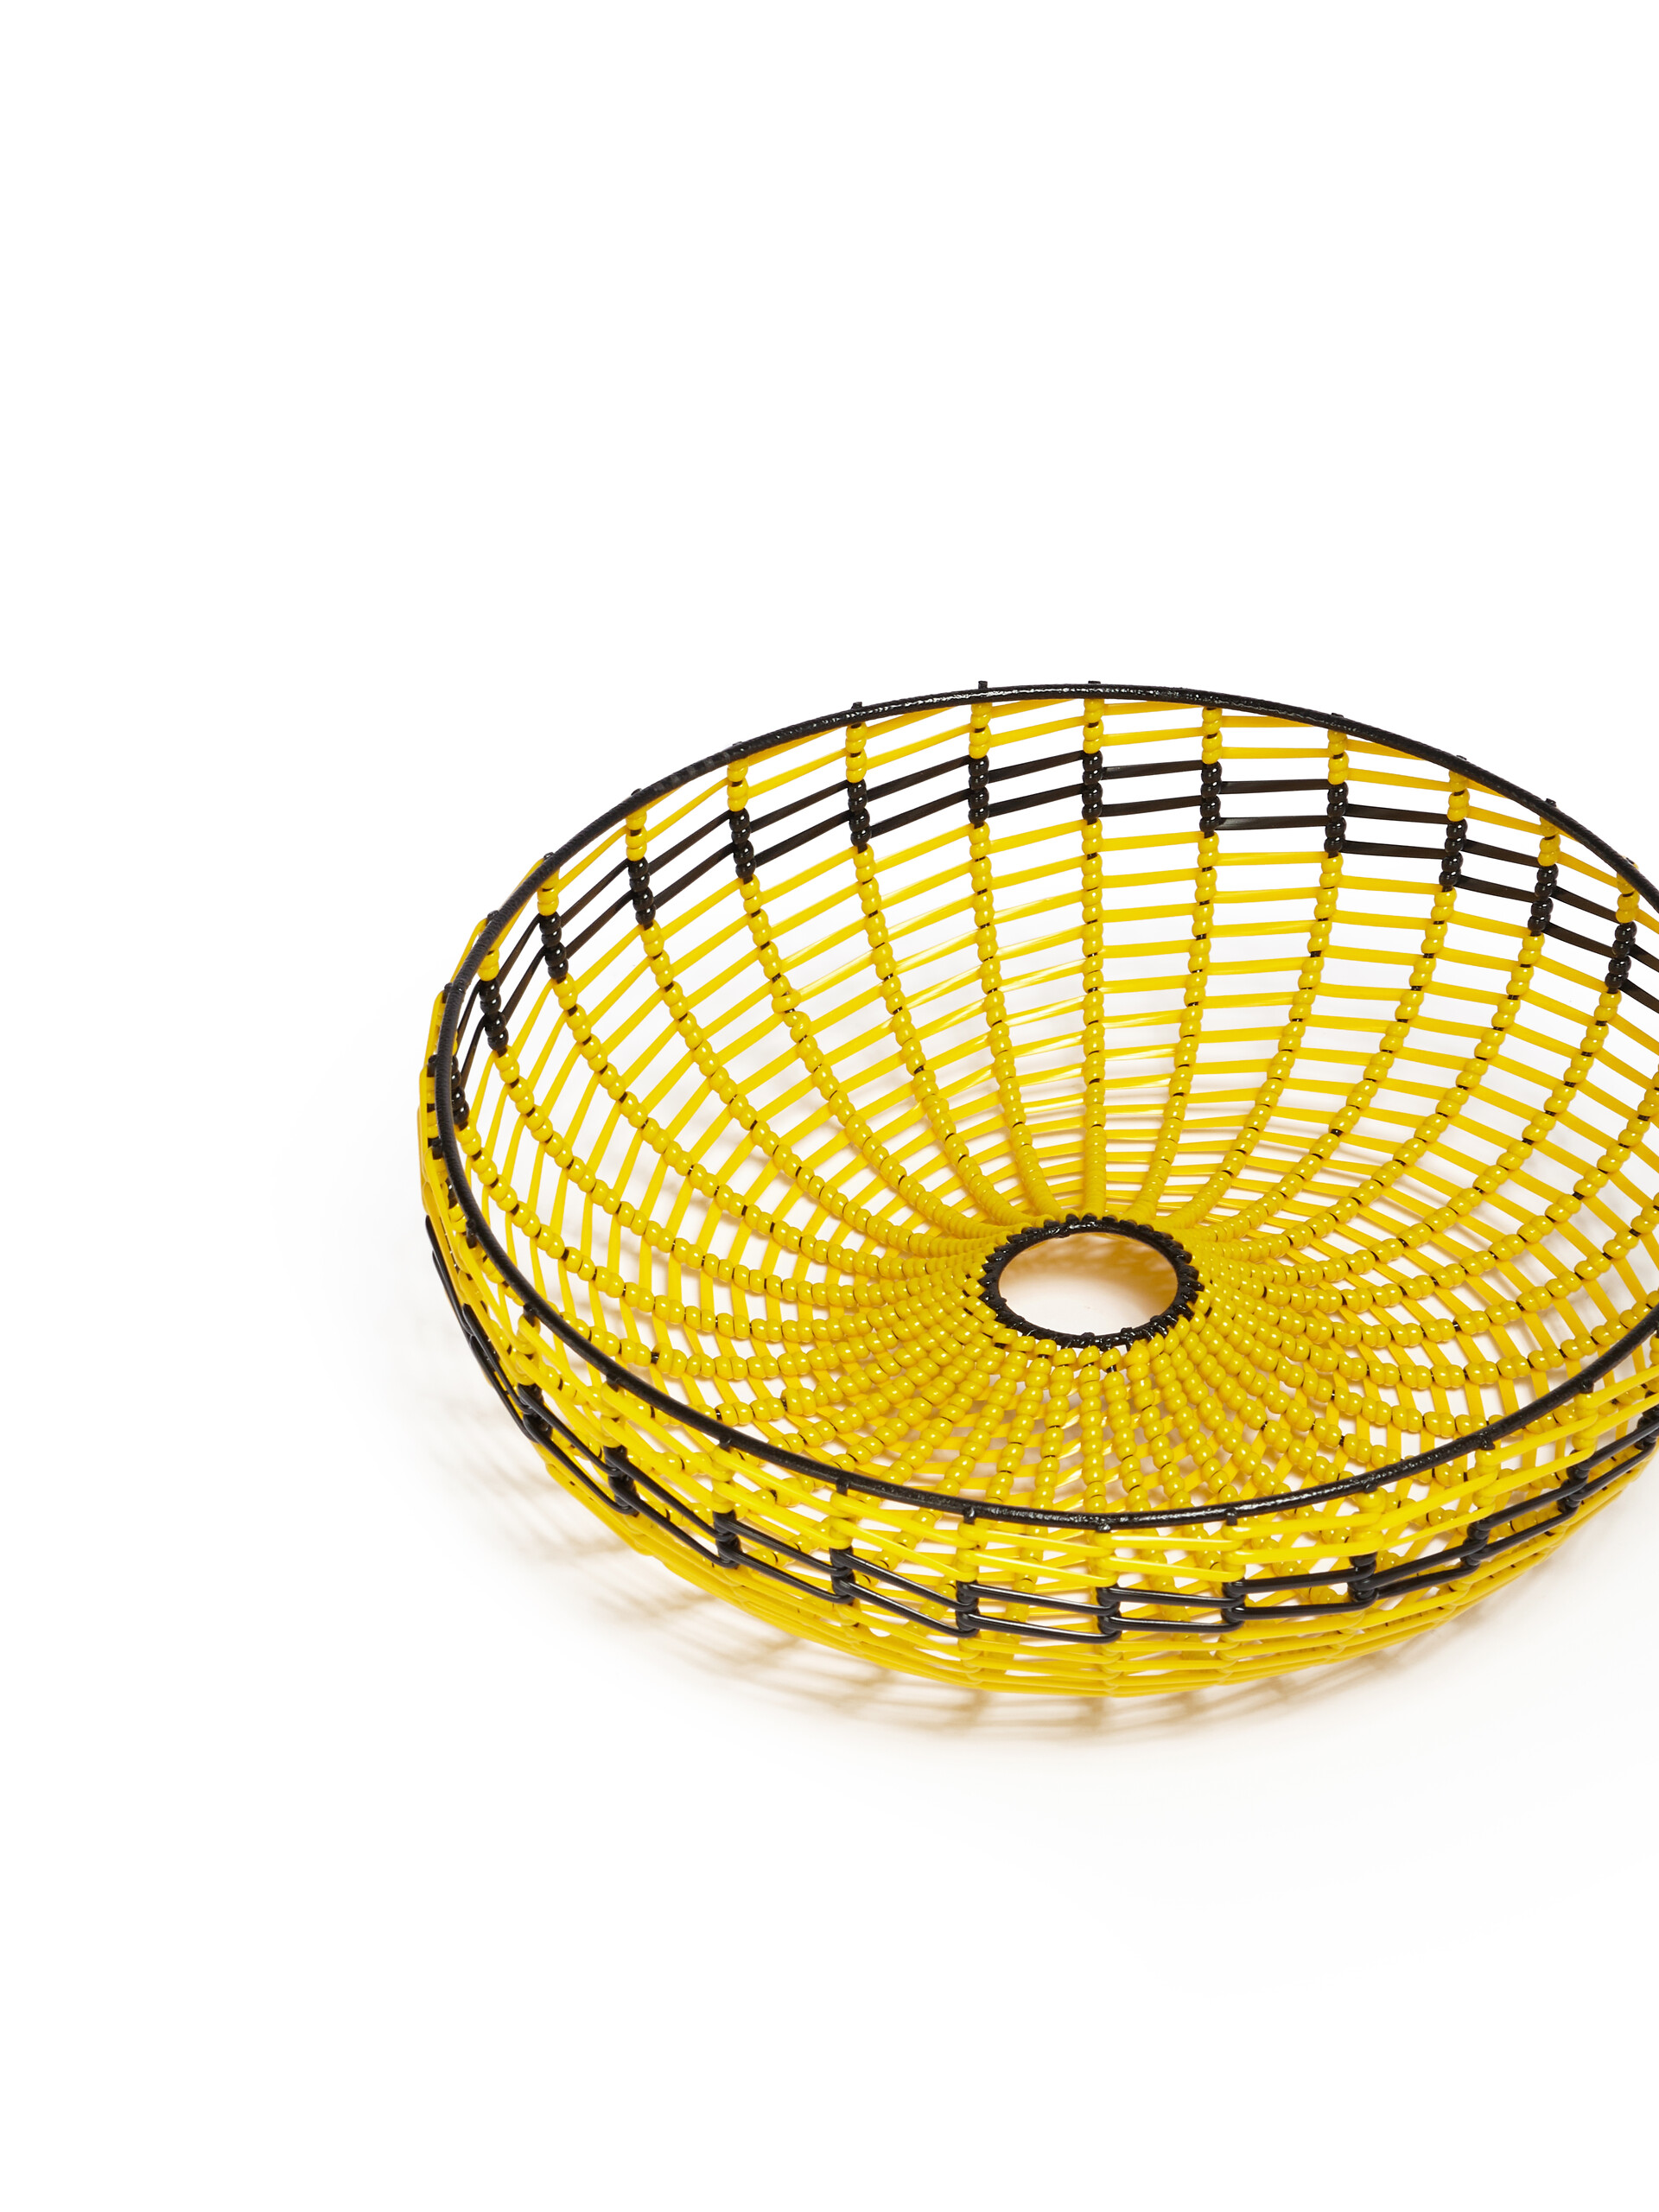 MARNI MARKET yellow and black medium basket - Accessories - Image 2